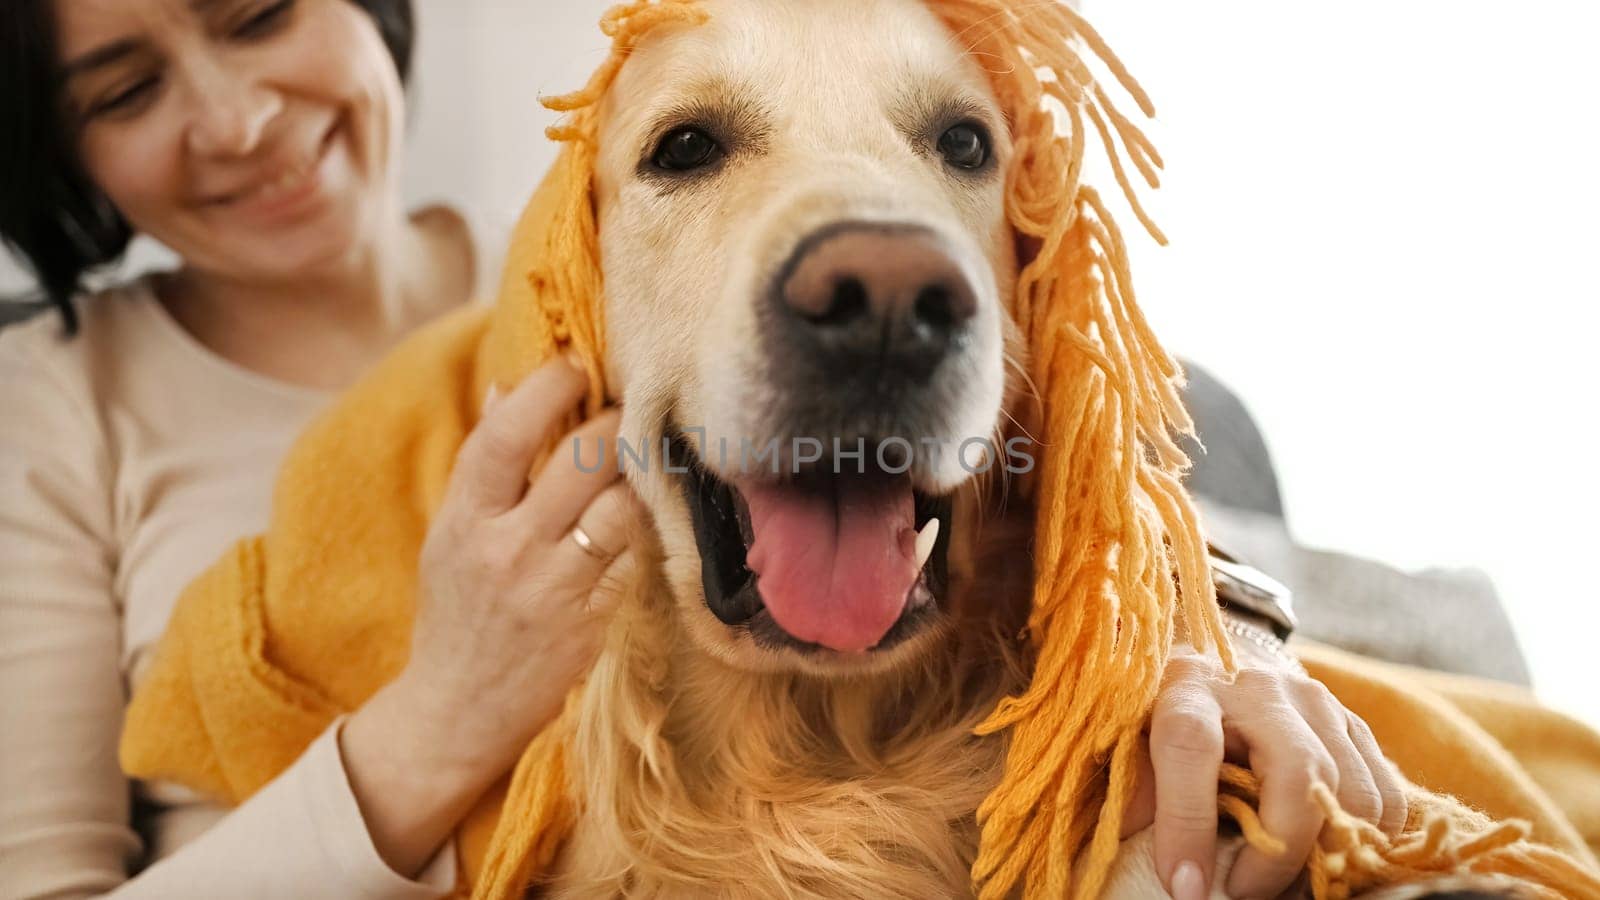 Golden retriever dog at home alone by GekaSkr